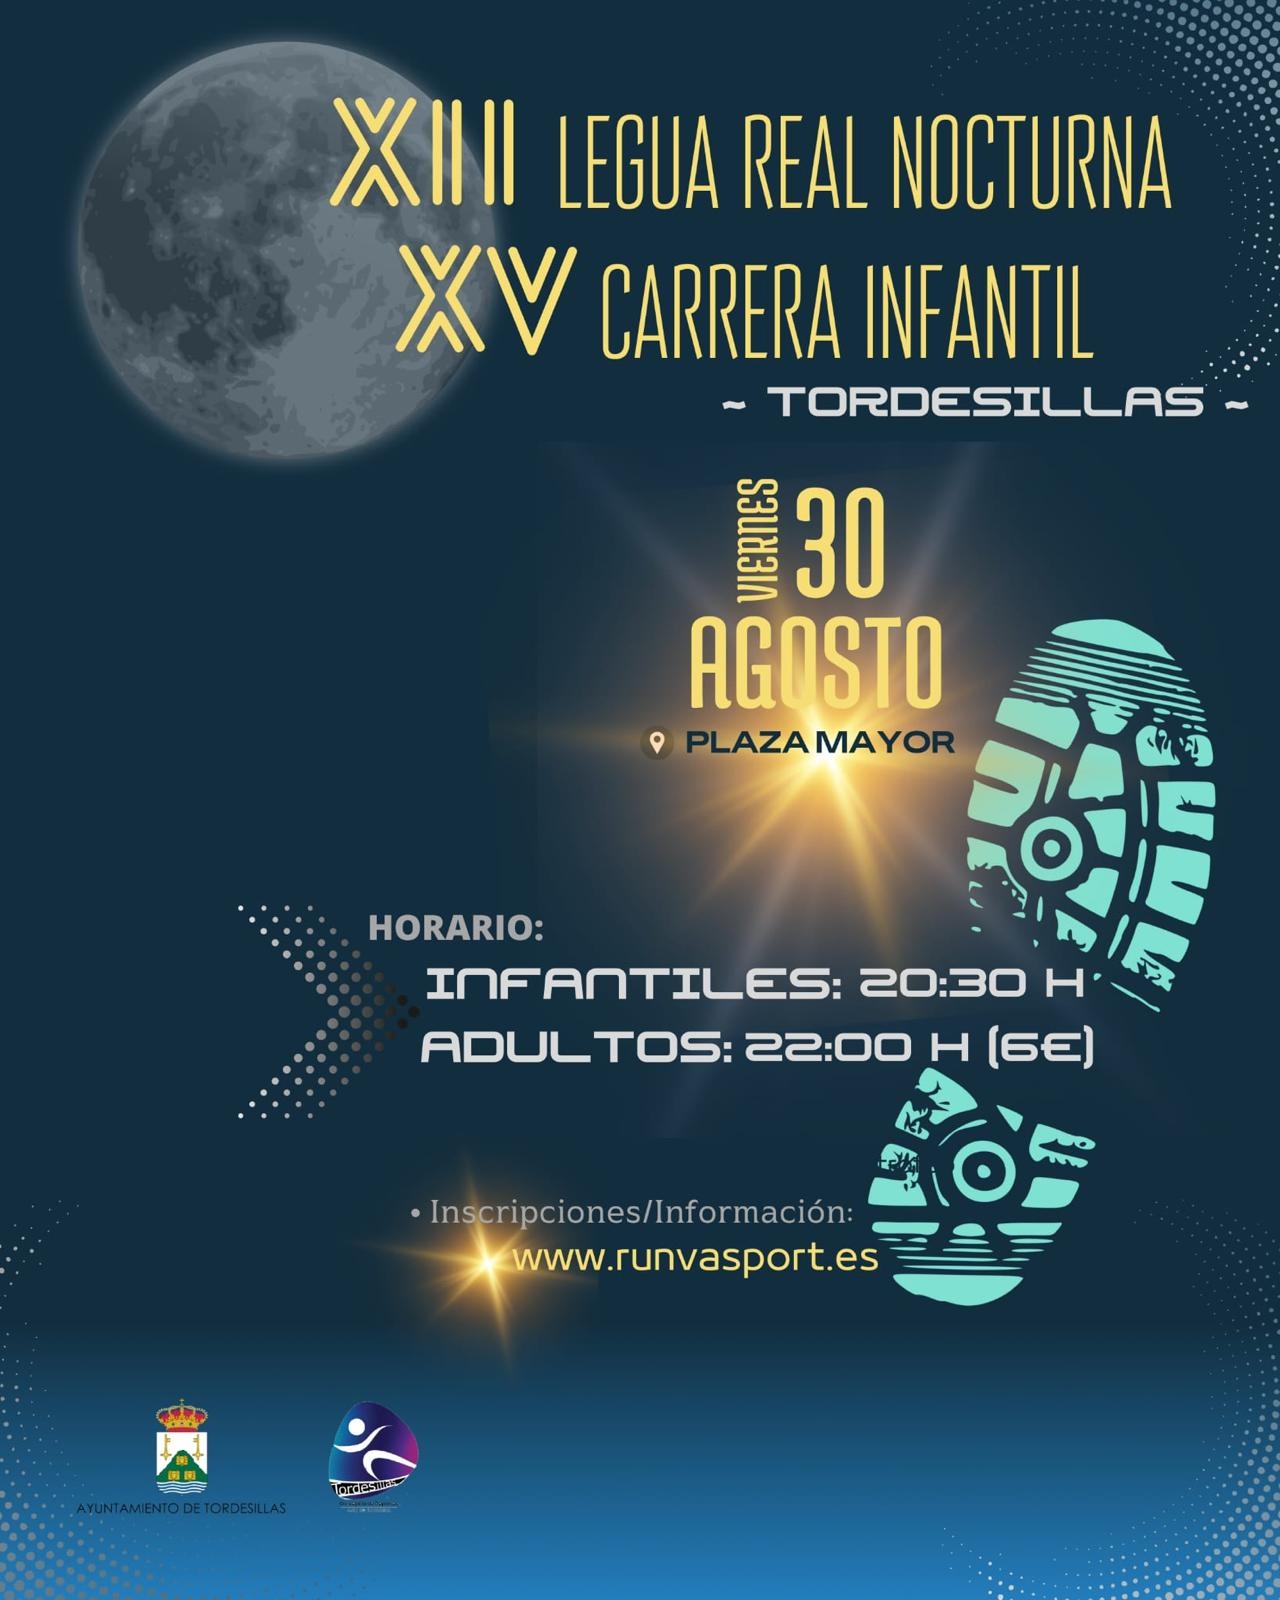 Cartel del evento XII LEGUA REAL NOCTURNA Y XV CARRERA INFANTIL TORDESILLAS